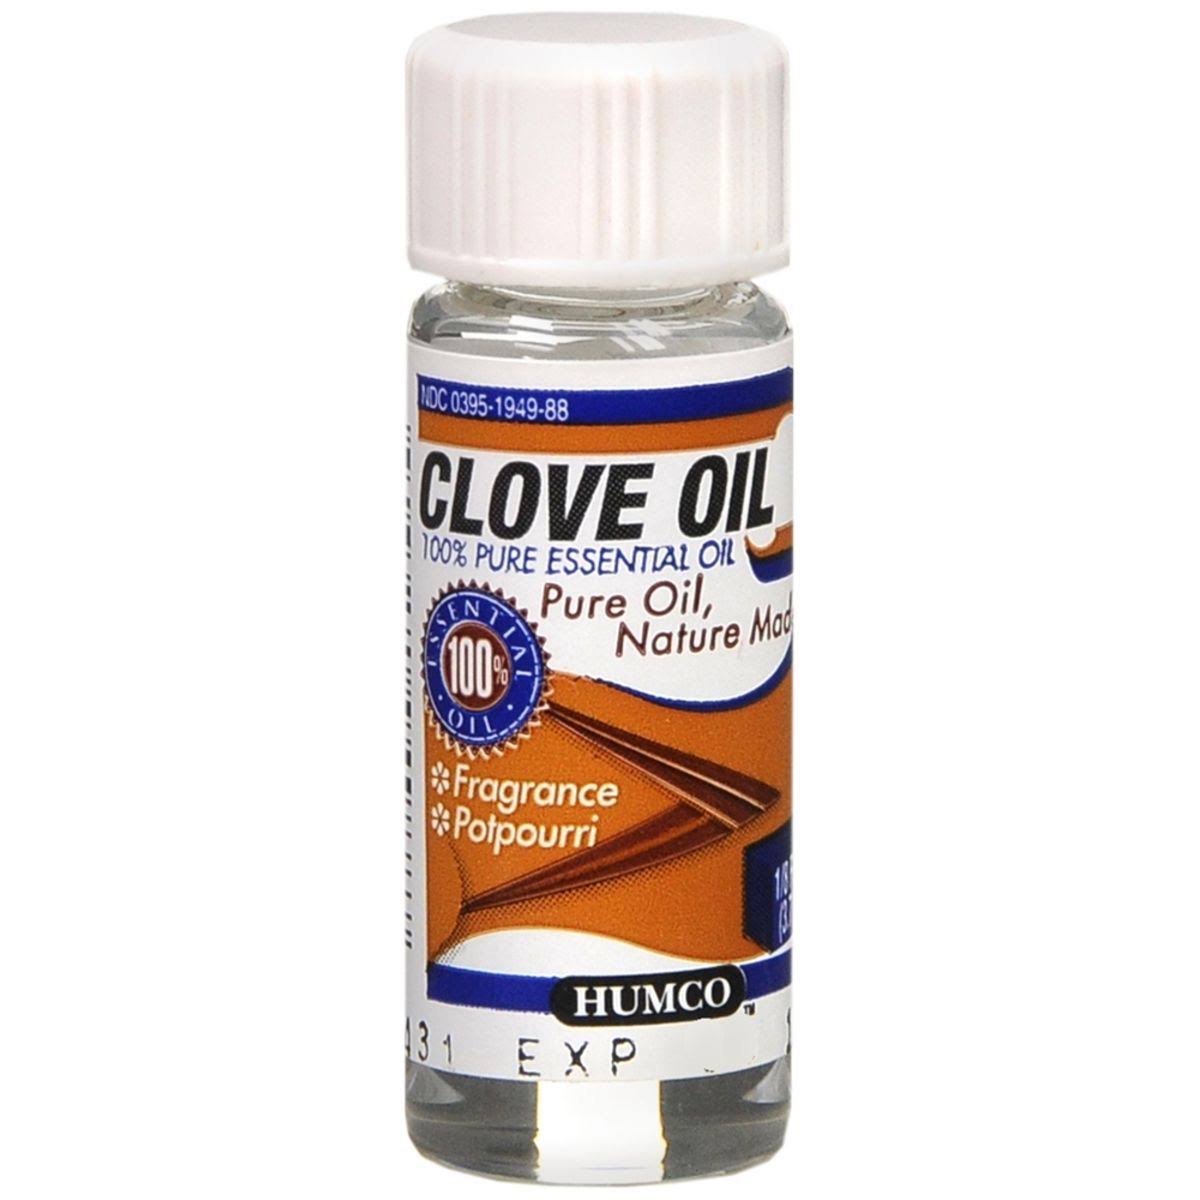 Humco Clove Oil